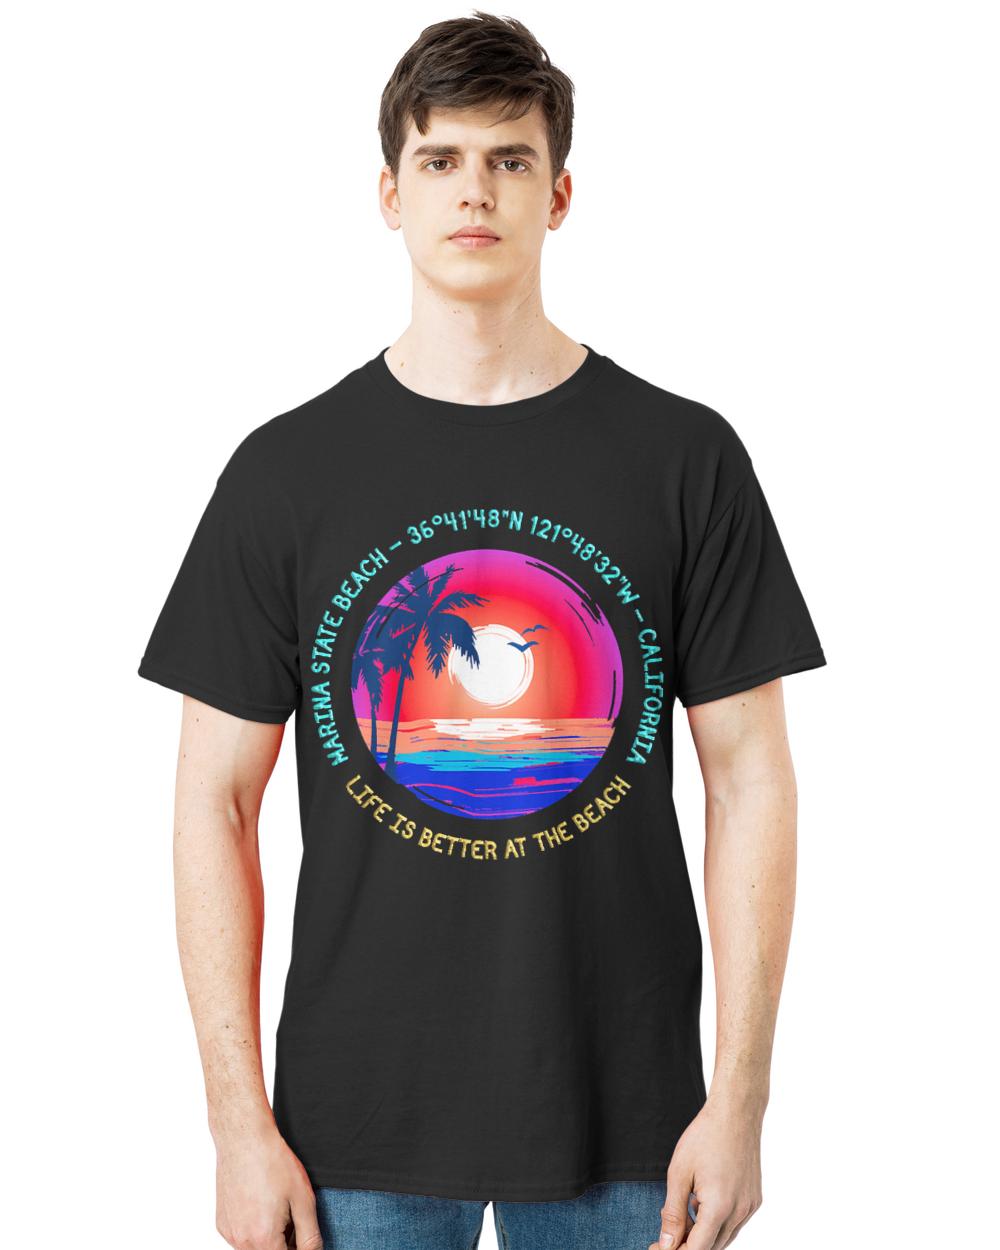 Marina State Beach T- Shirt Marina State Beach, California T- Shirt